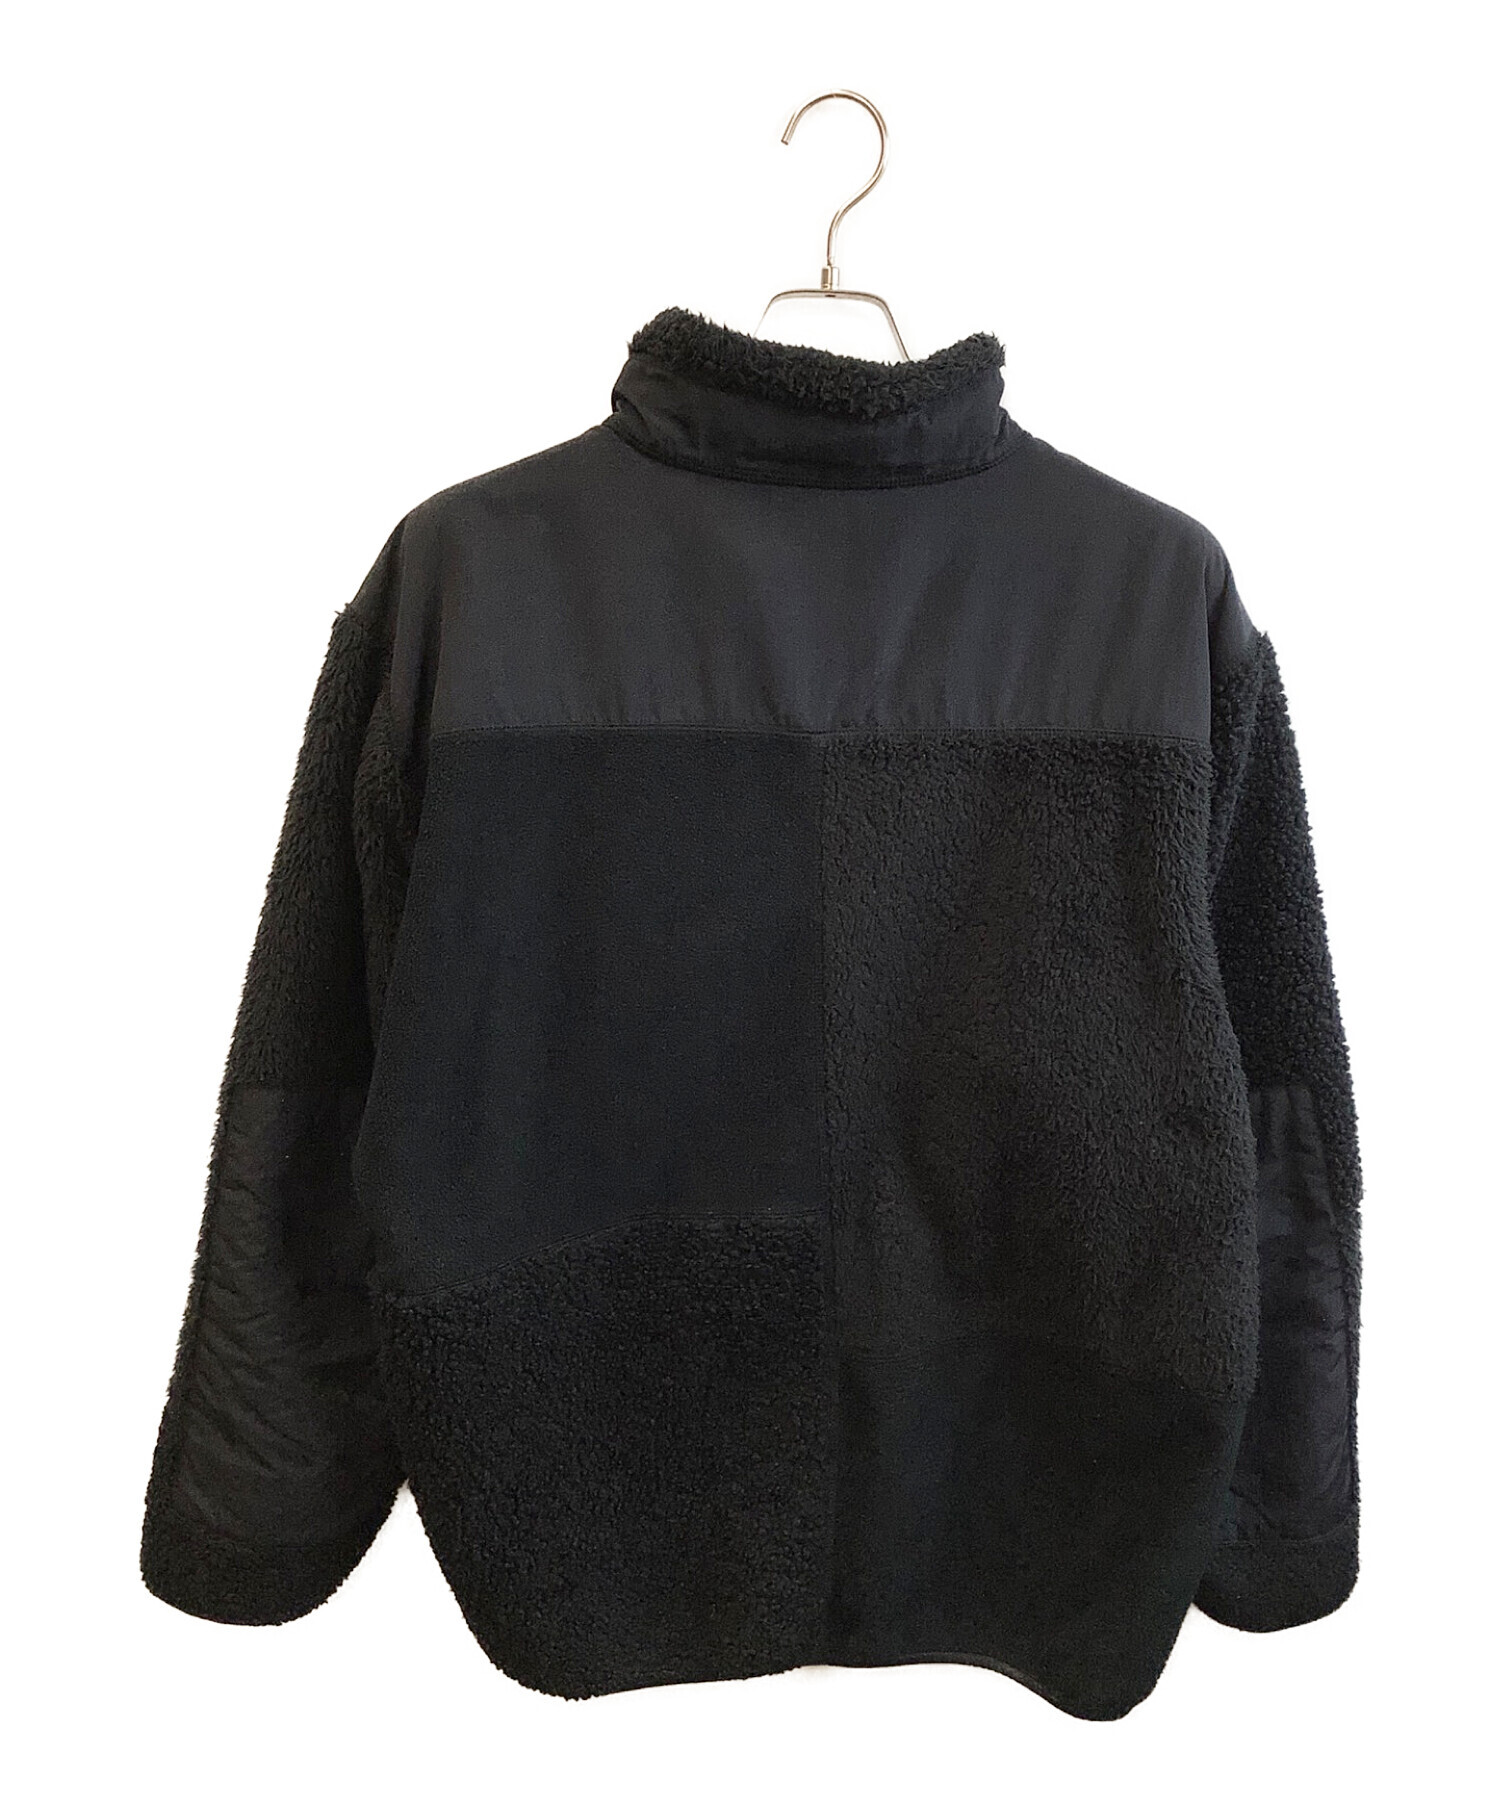 UNIQLO (ユニクロ) Engineered Garments (エンジニアド ガーメンツ) フリースジャケット ブラック サイズ:XL